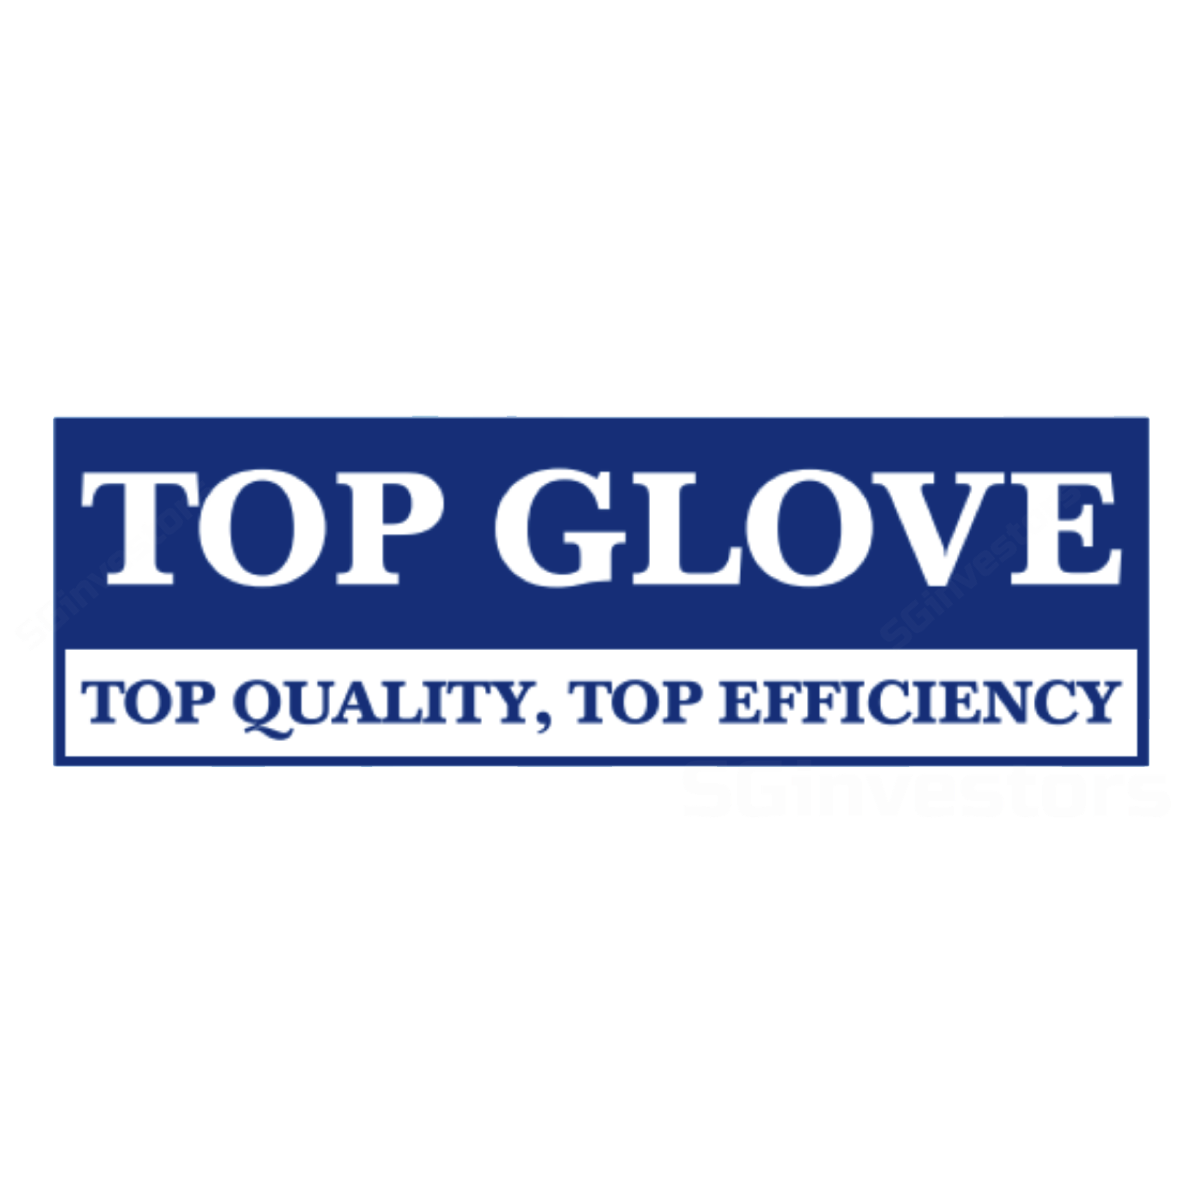 Top Glove Share Price History (SGX:BVA) | SG investors.io